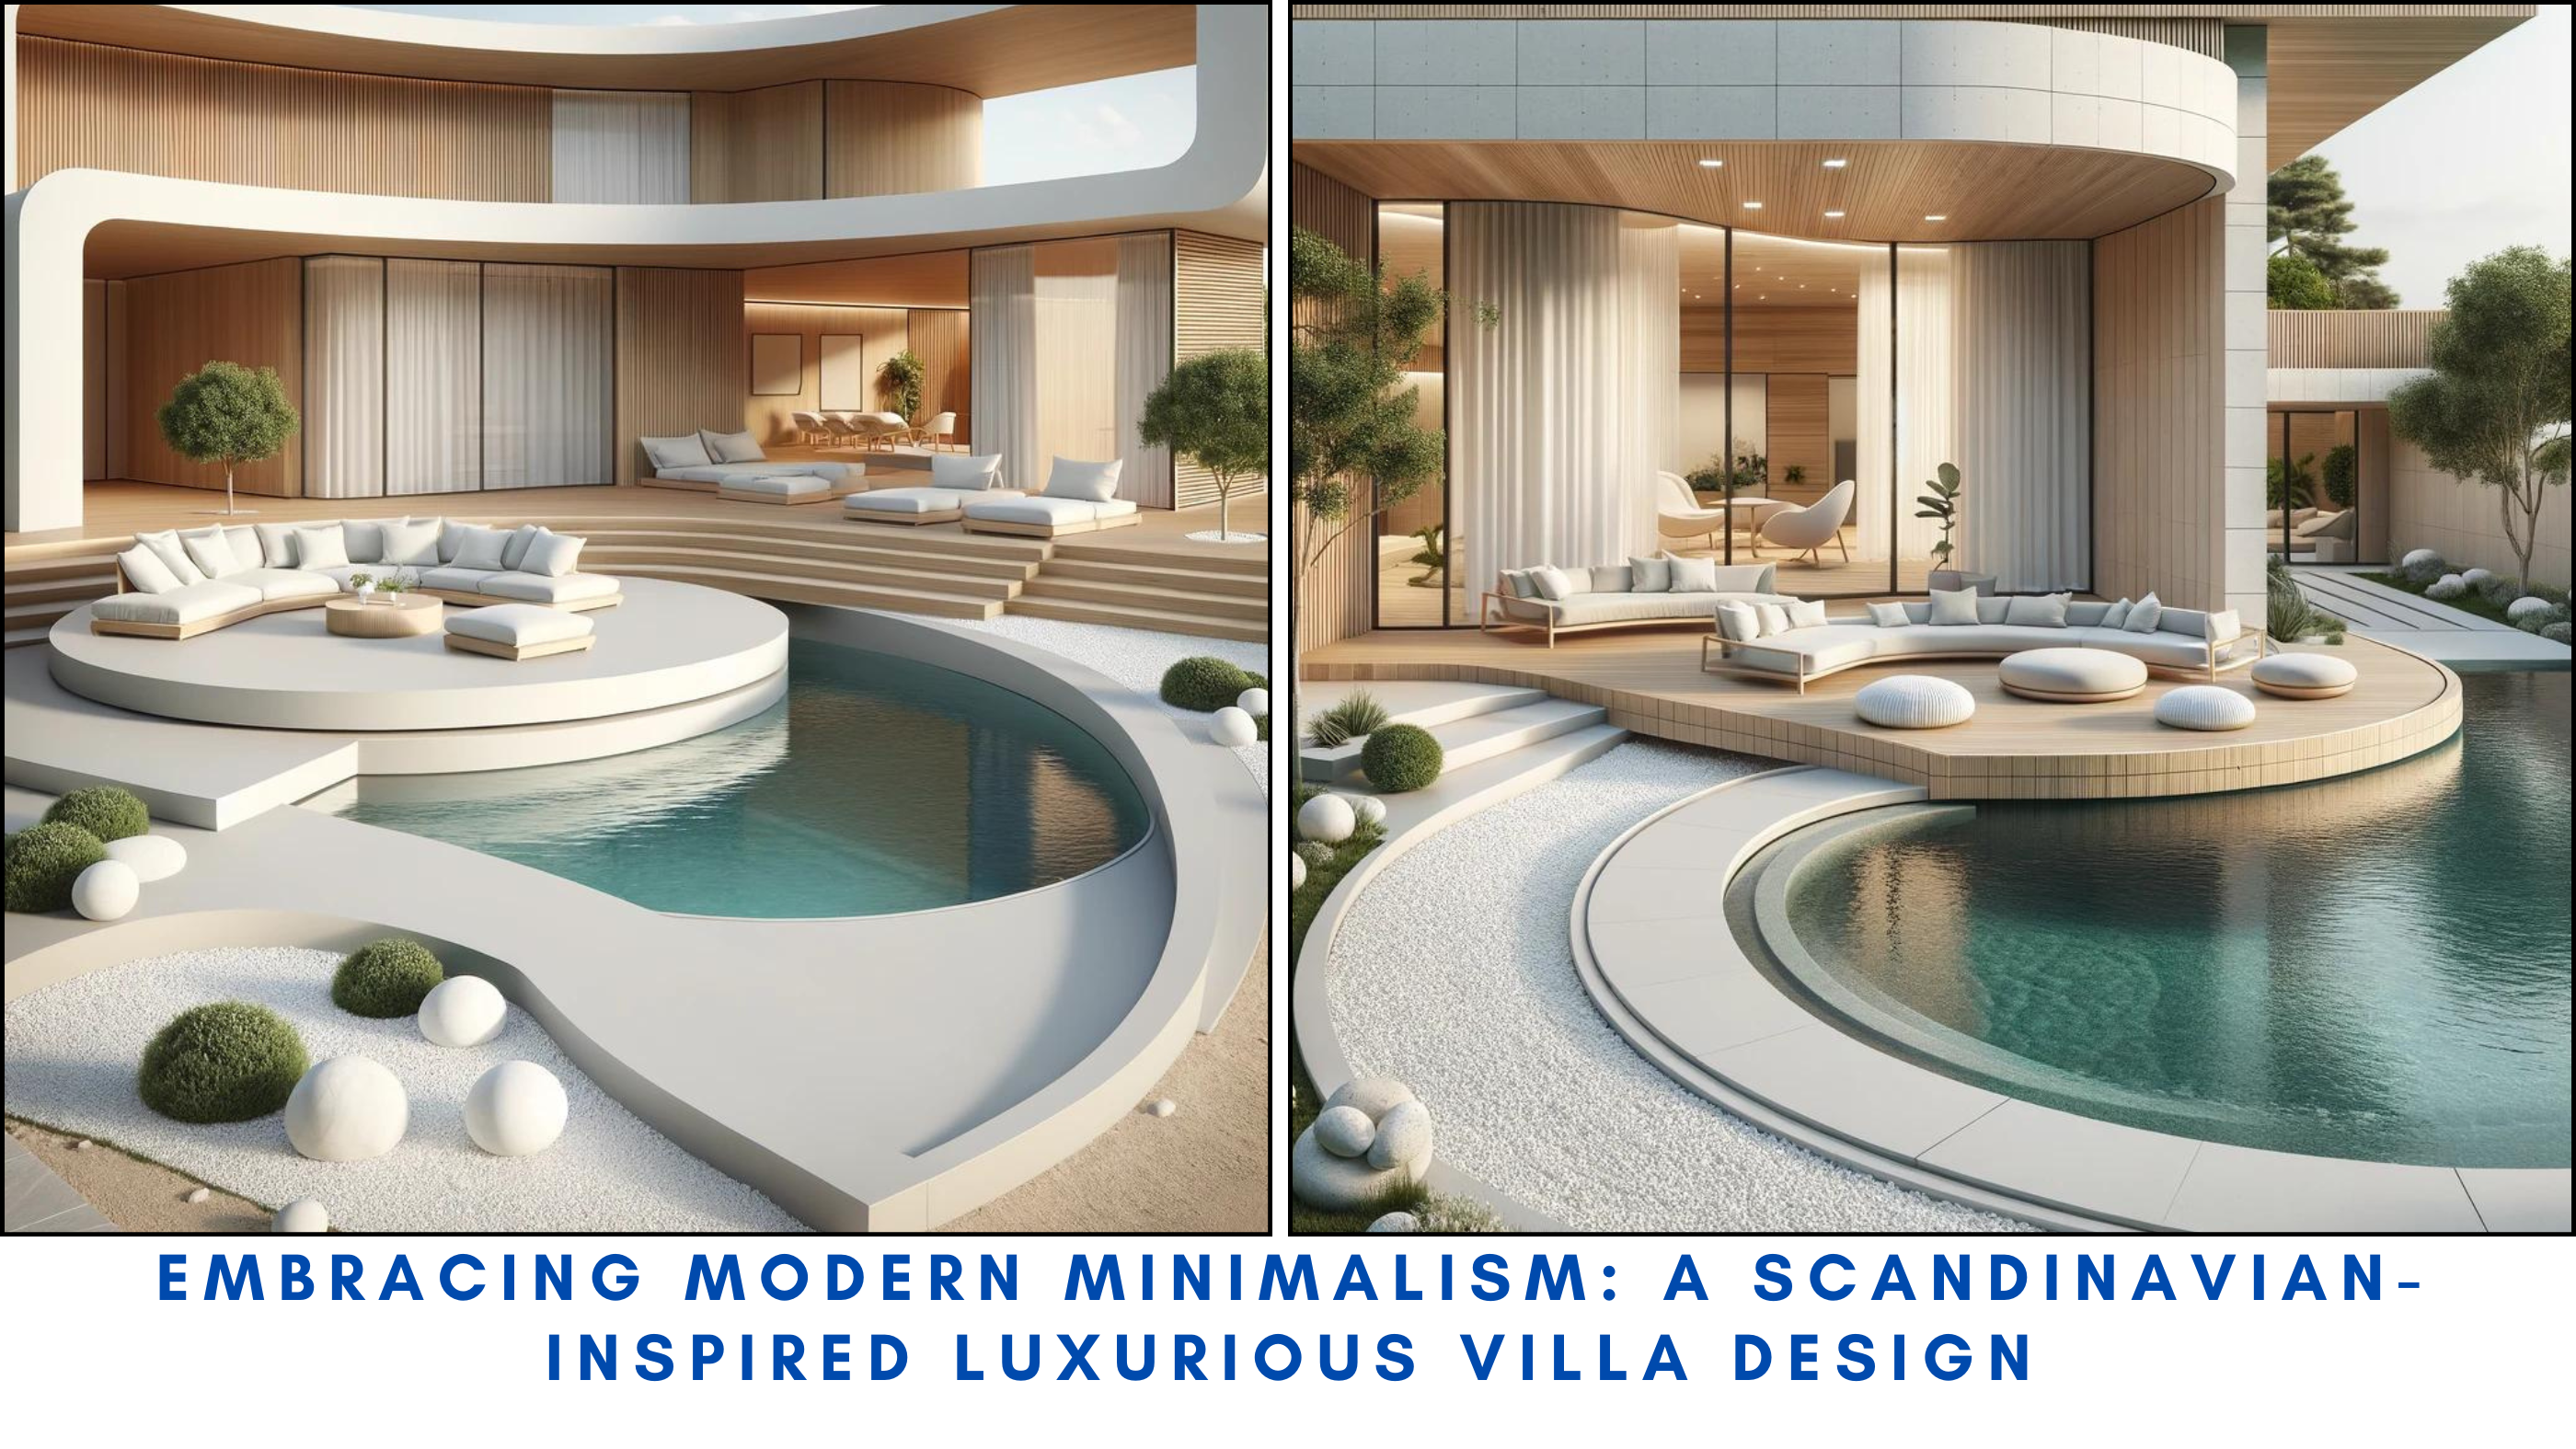 Scandinavian minimalist villa with circular lounge area by a pool.